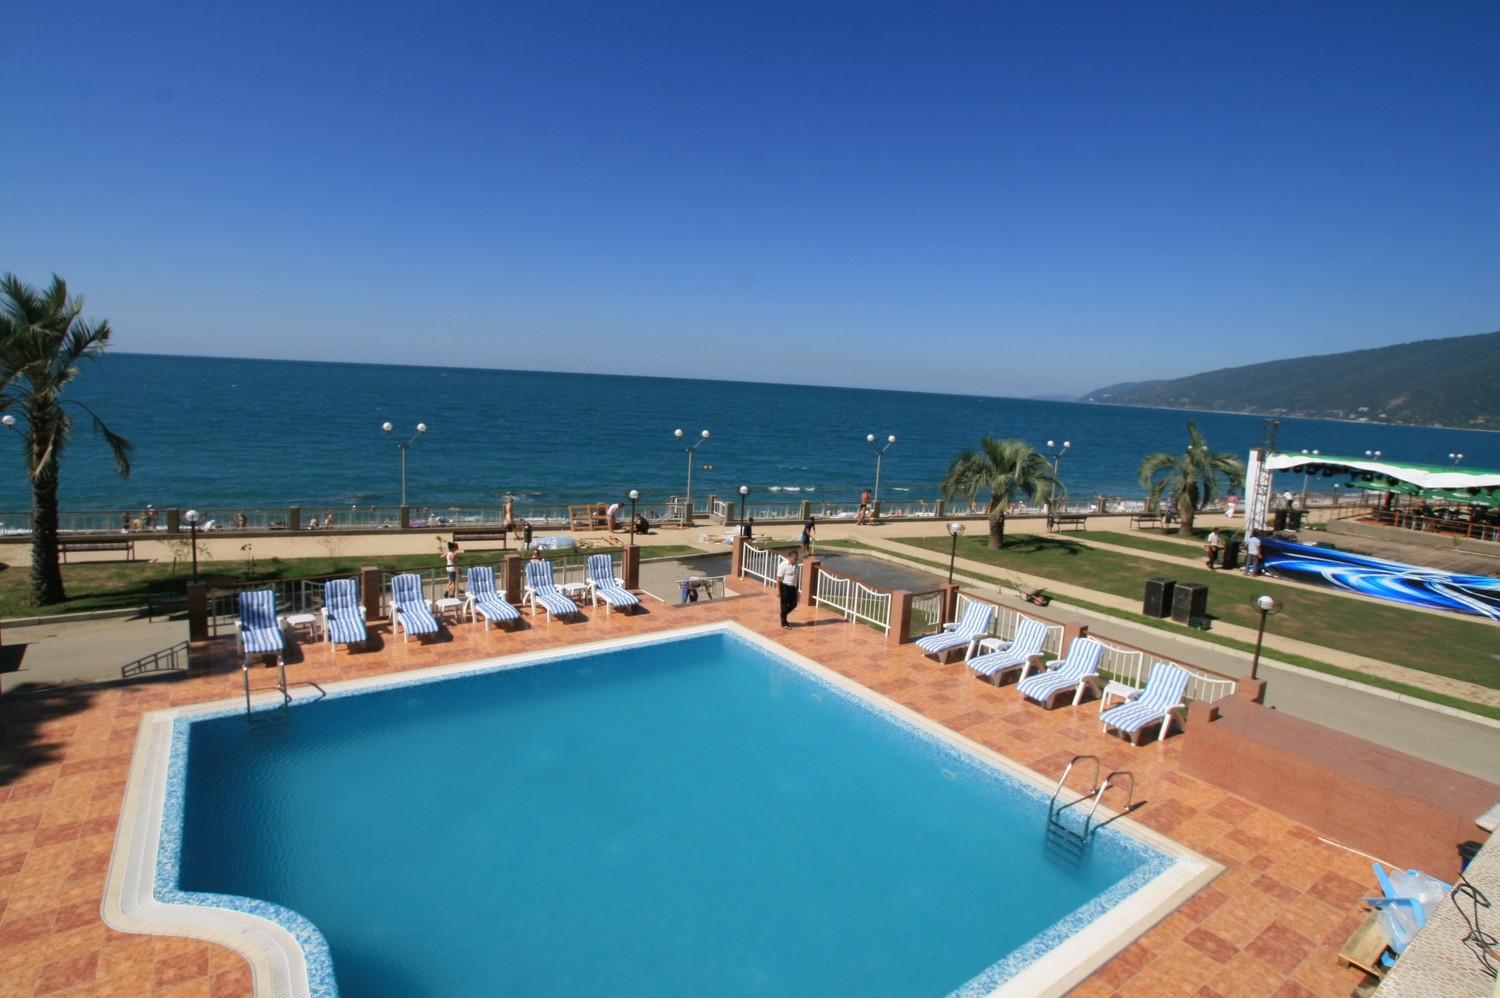 фото Бассейн, Отель "Alex Beach Hotel", Абхазия